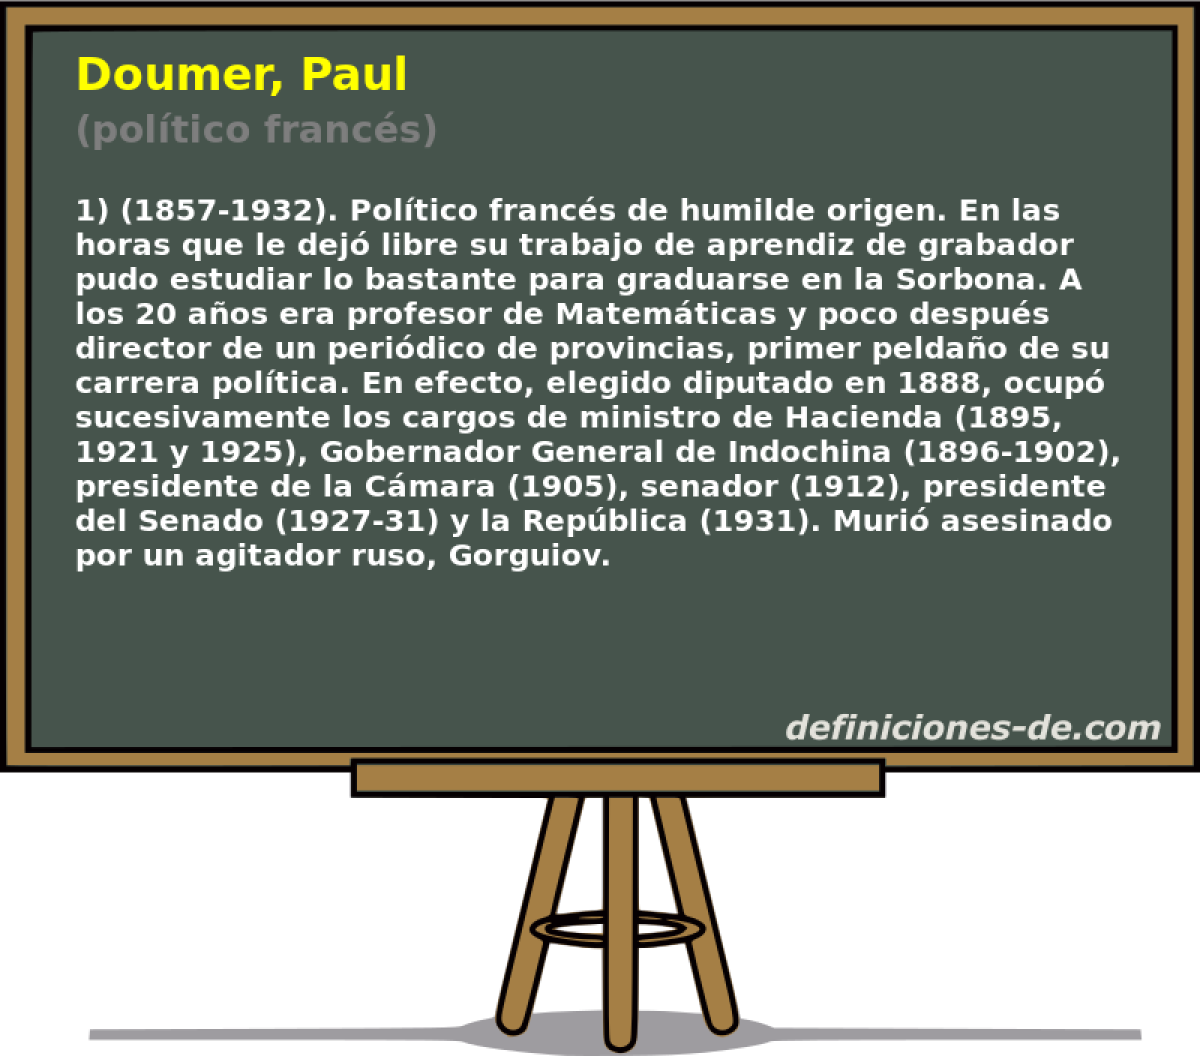 Doumer, Paul (poltico francs)